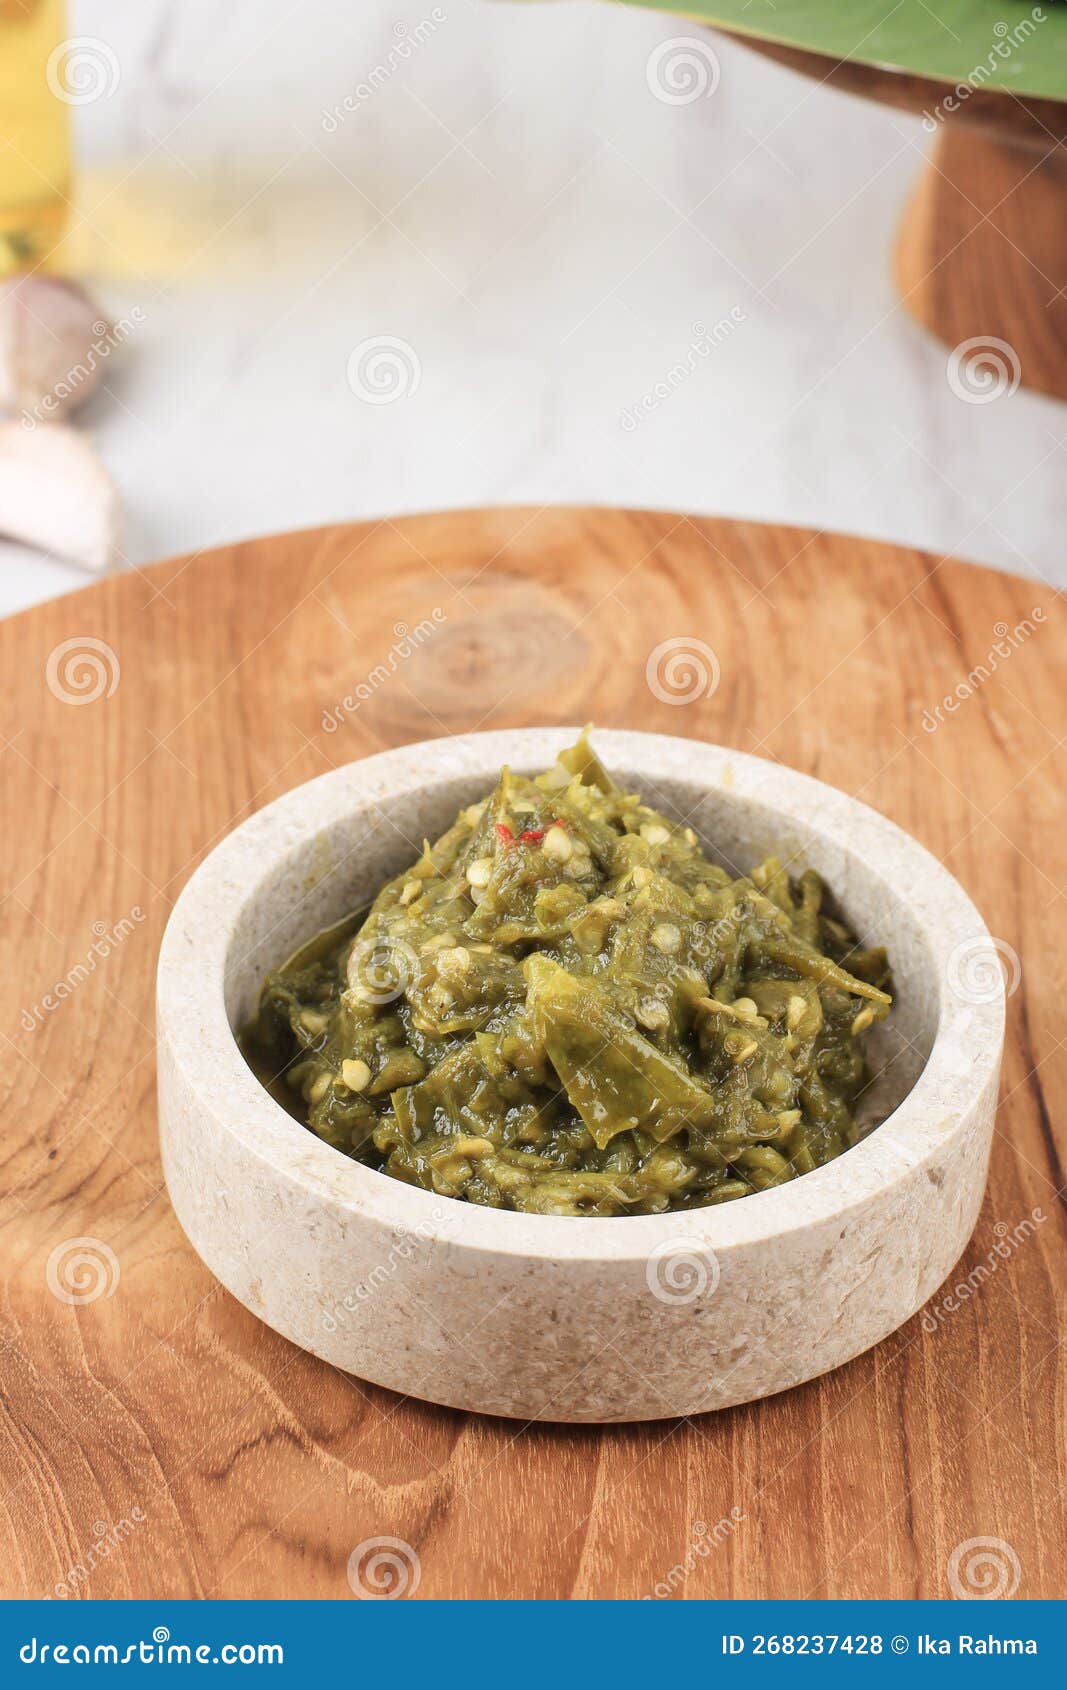 sambal lado mudo cabe ijo. traditional green chili paste